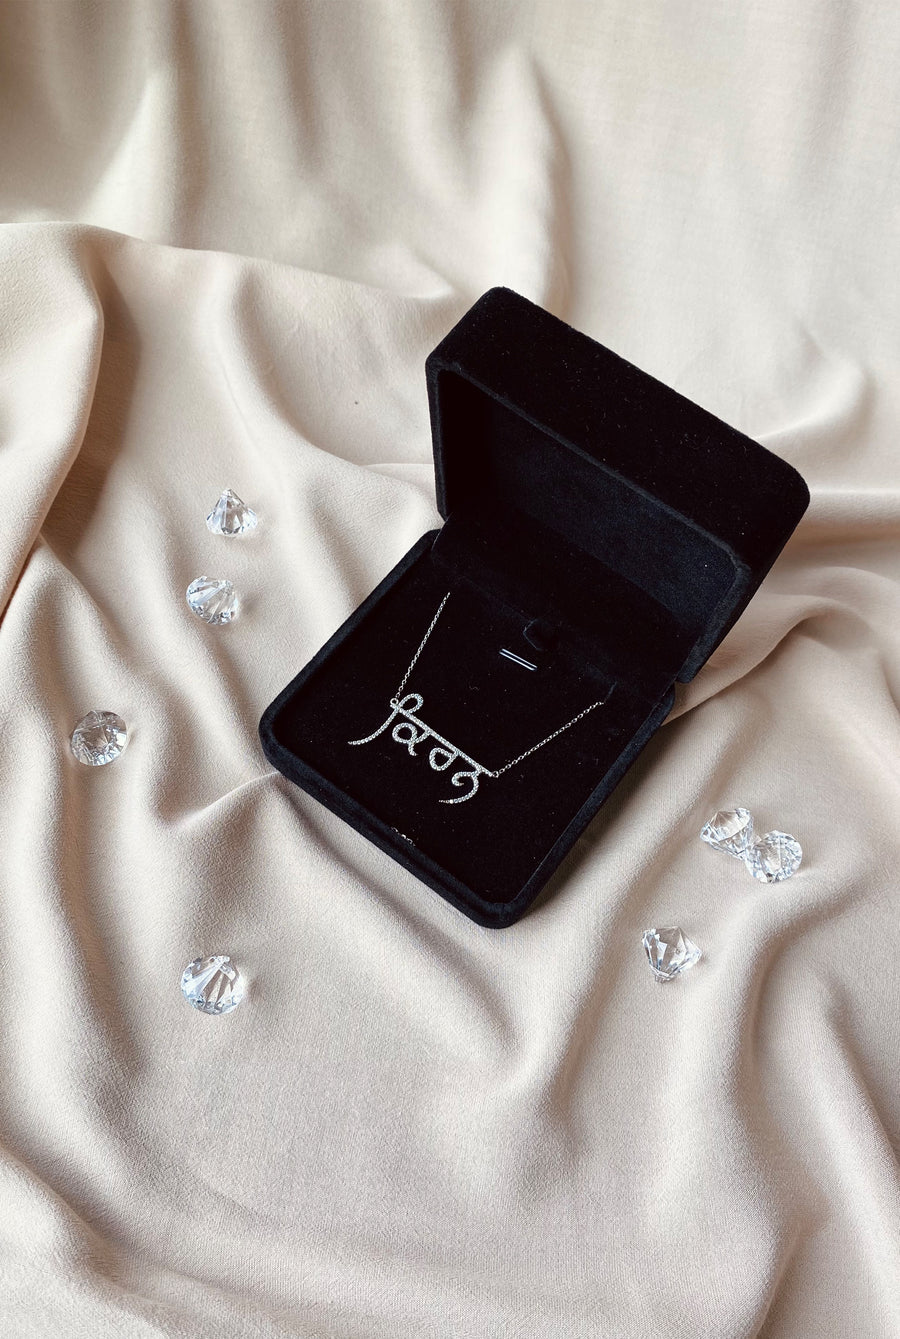 Diamante Personalized Punjabi Name Necklace